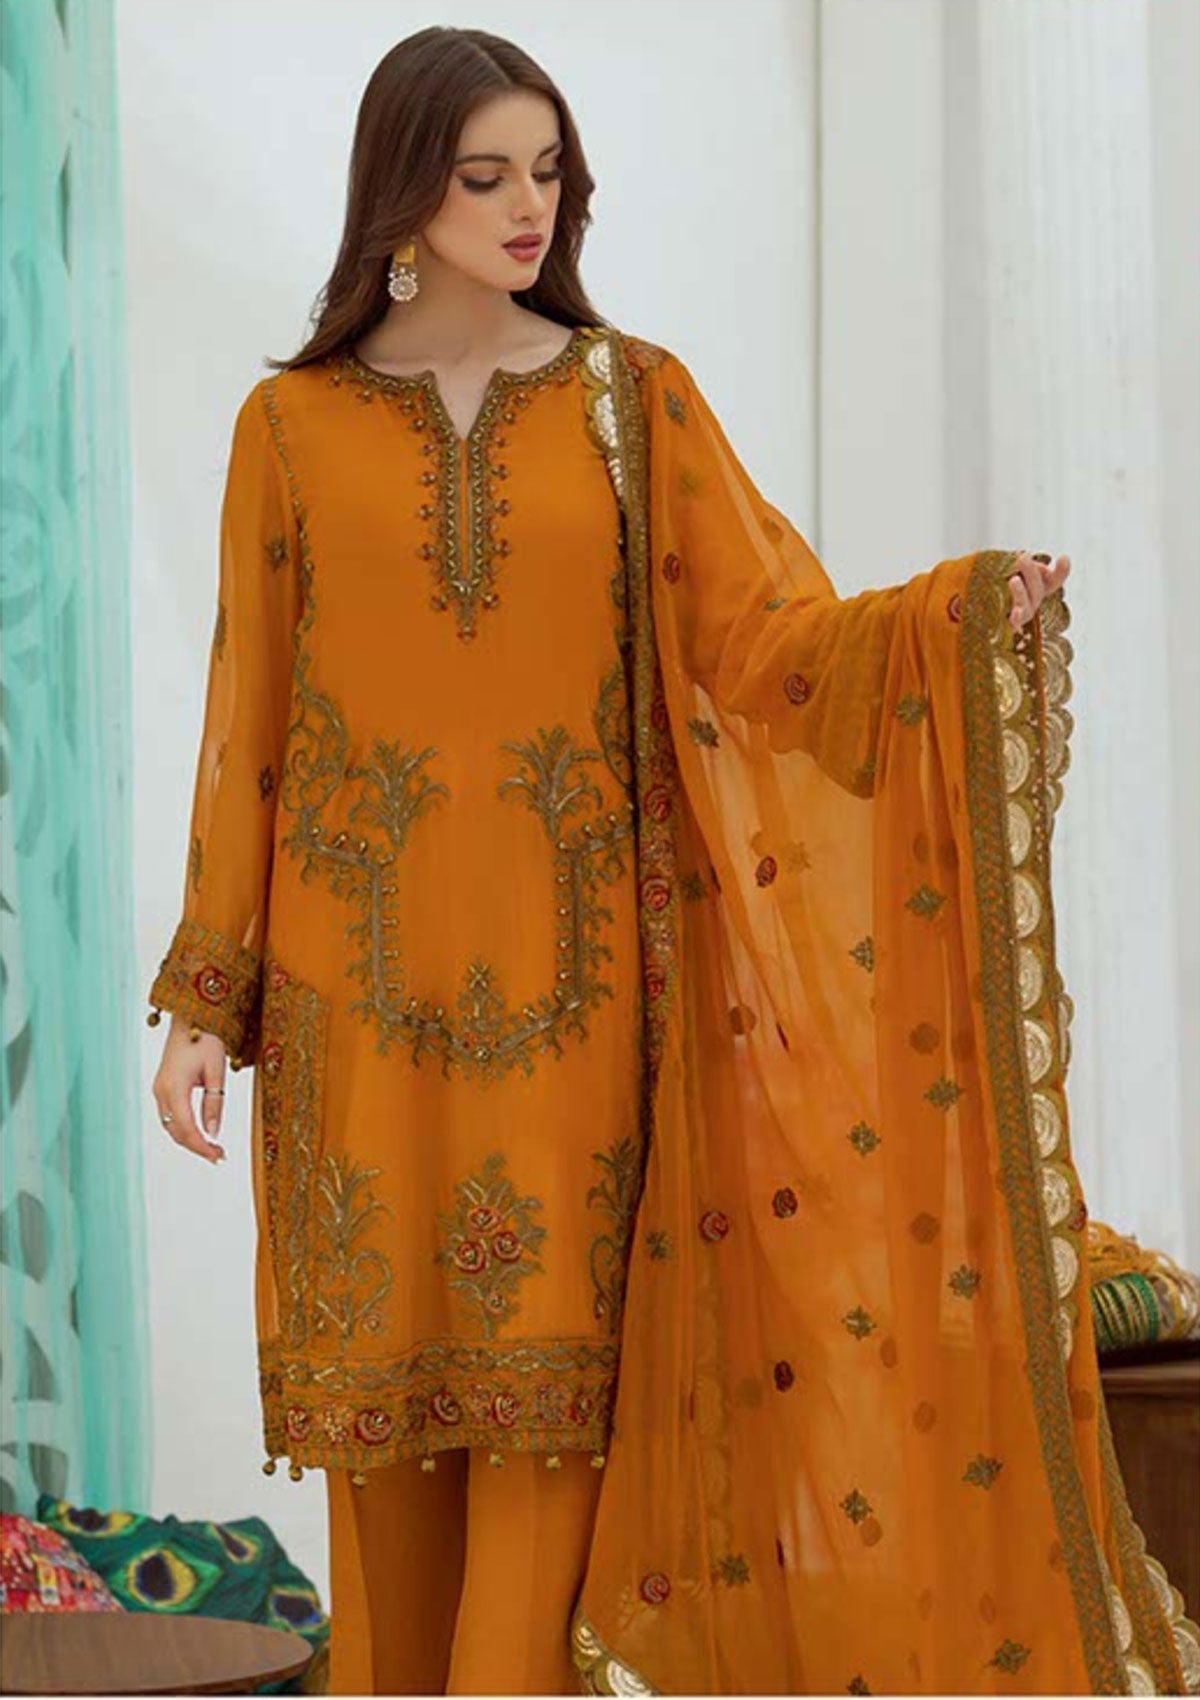 Formal Dress - Noorma kaamal - Noor Jahan - NKC#03 available at Saleem Fabrics Traditions